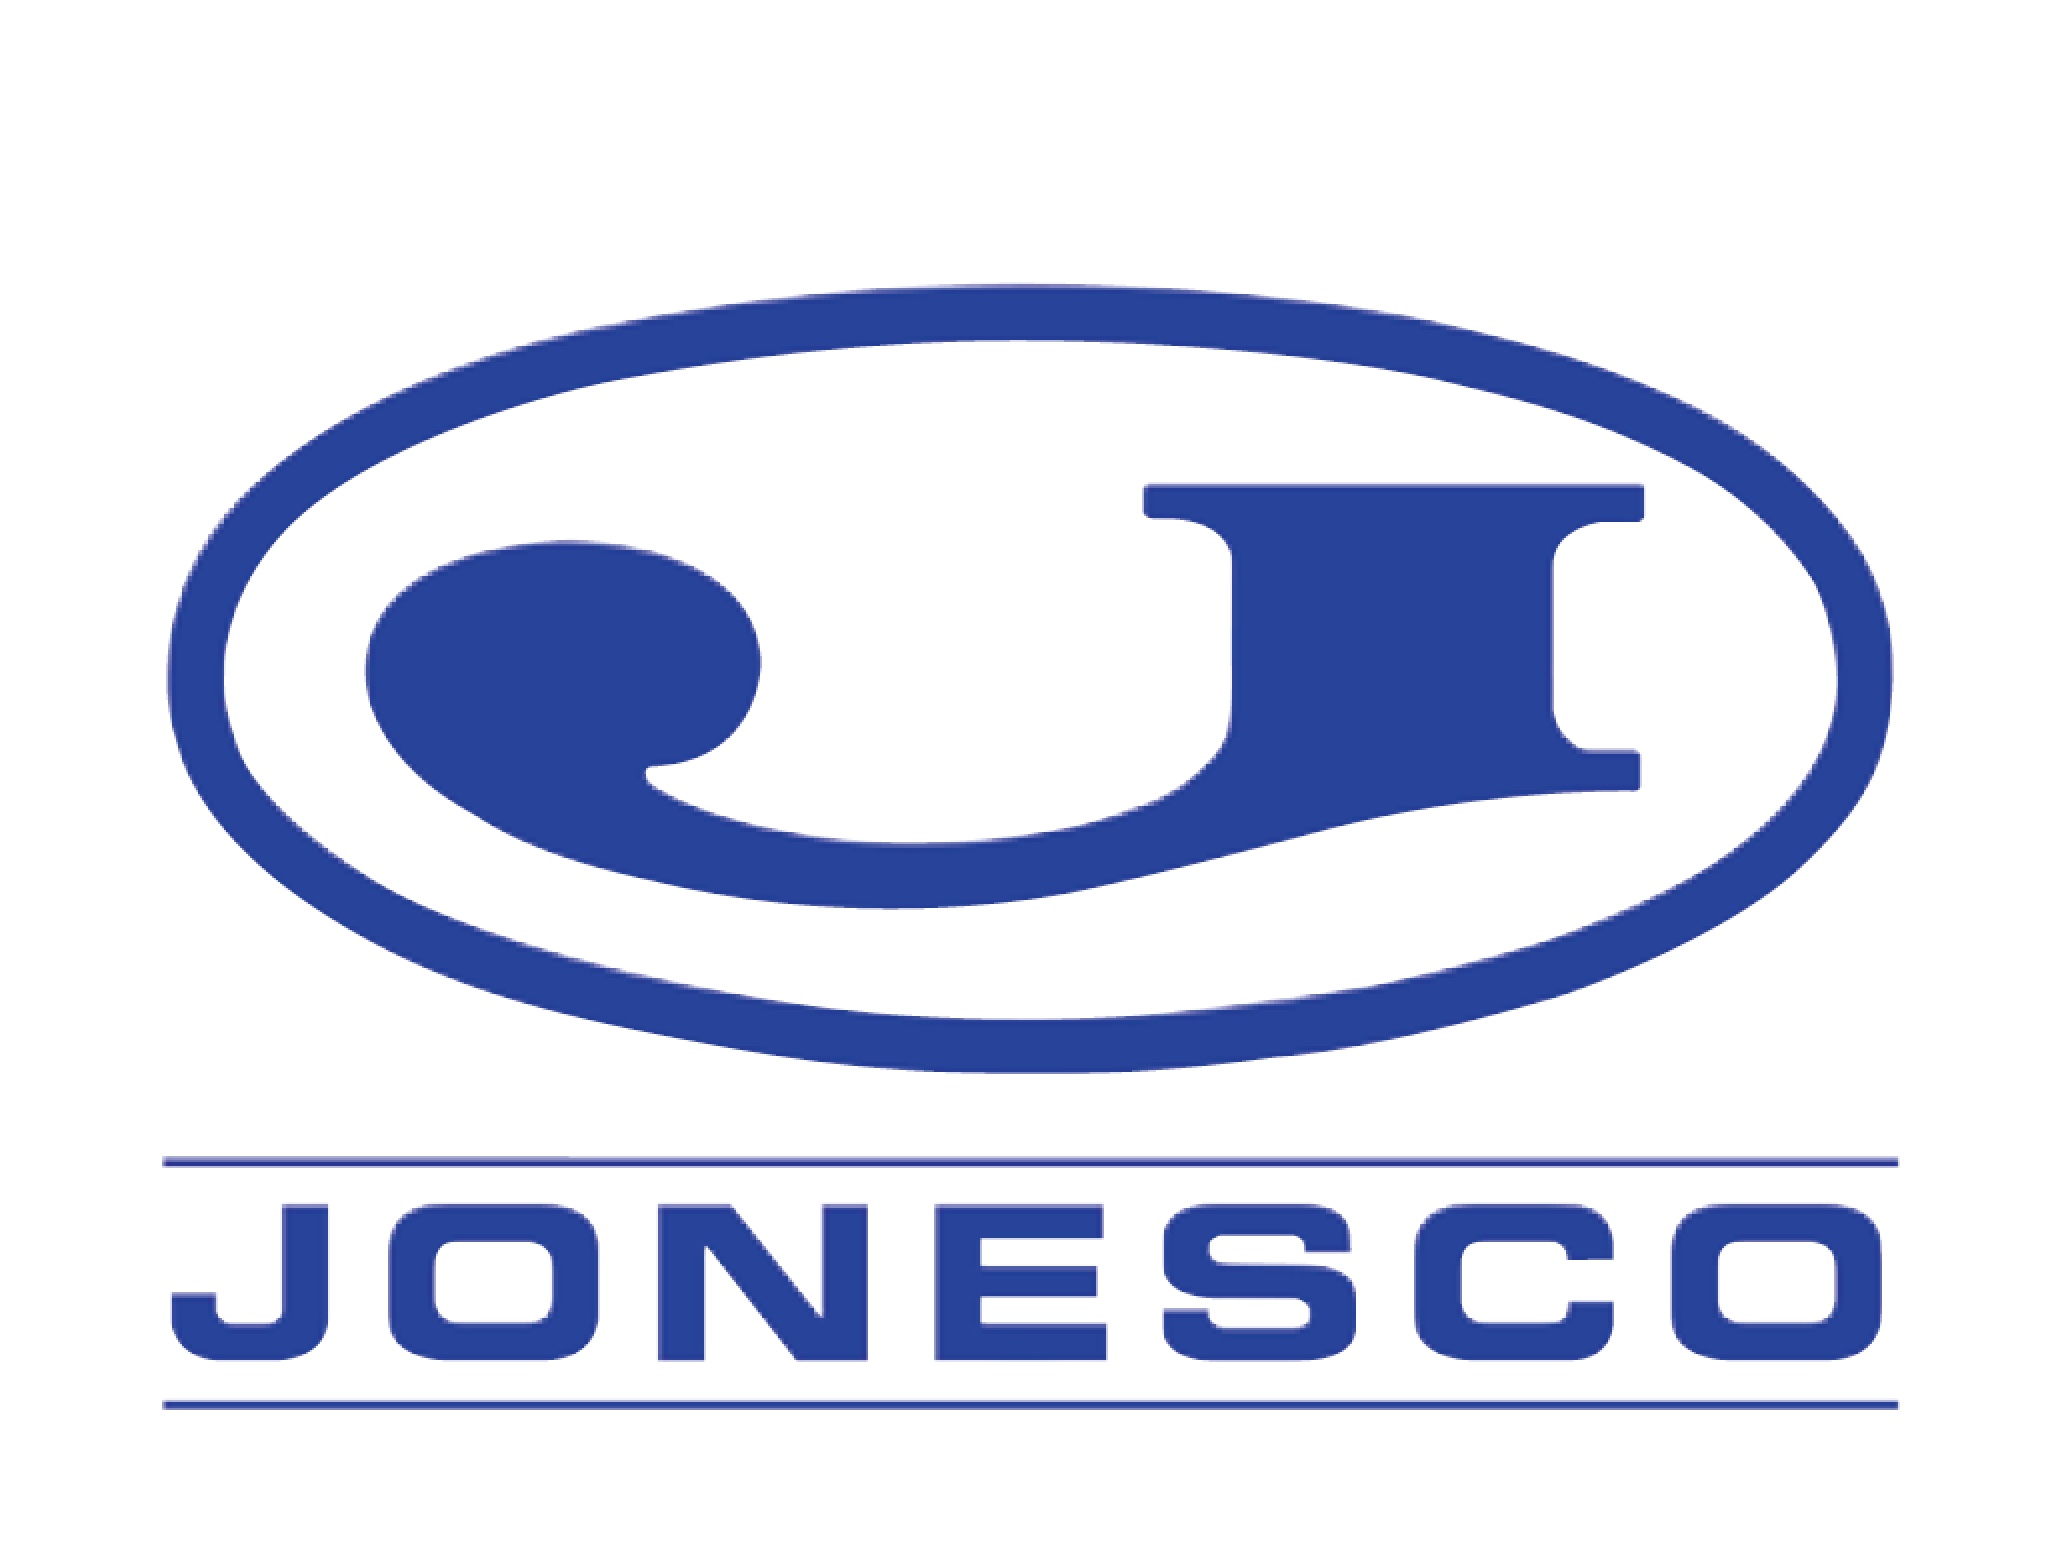 Jonesco logo